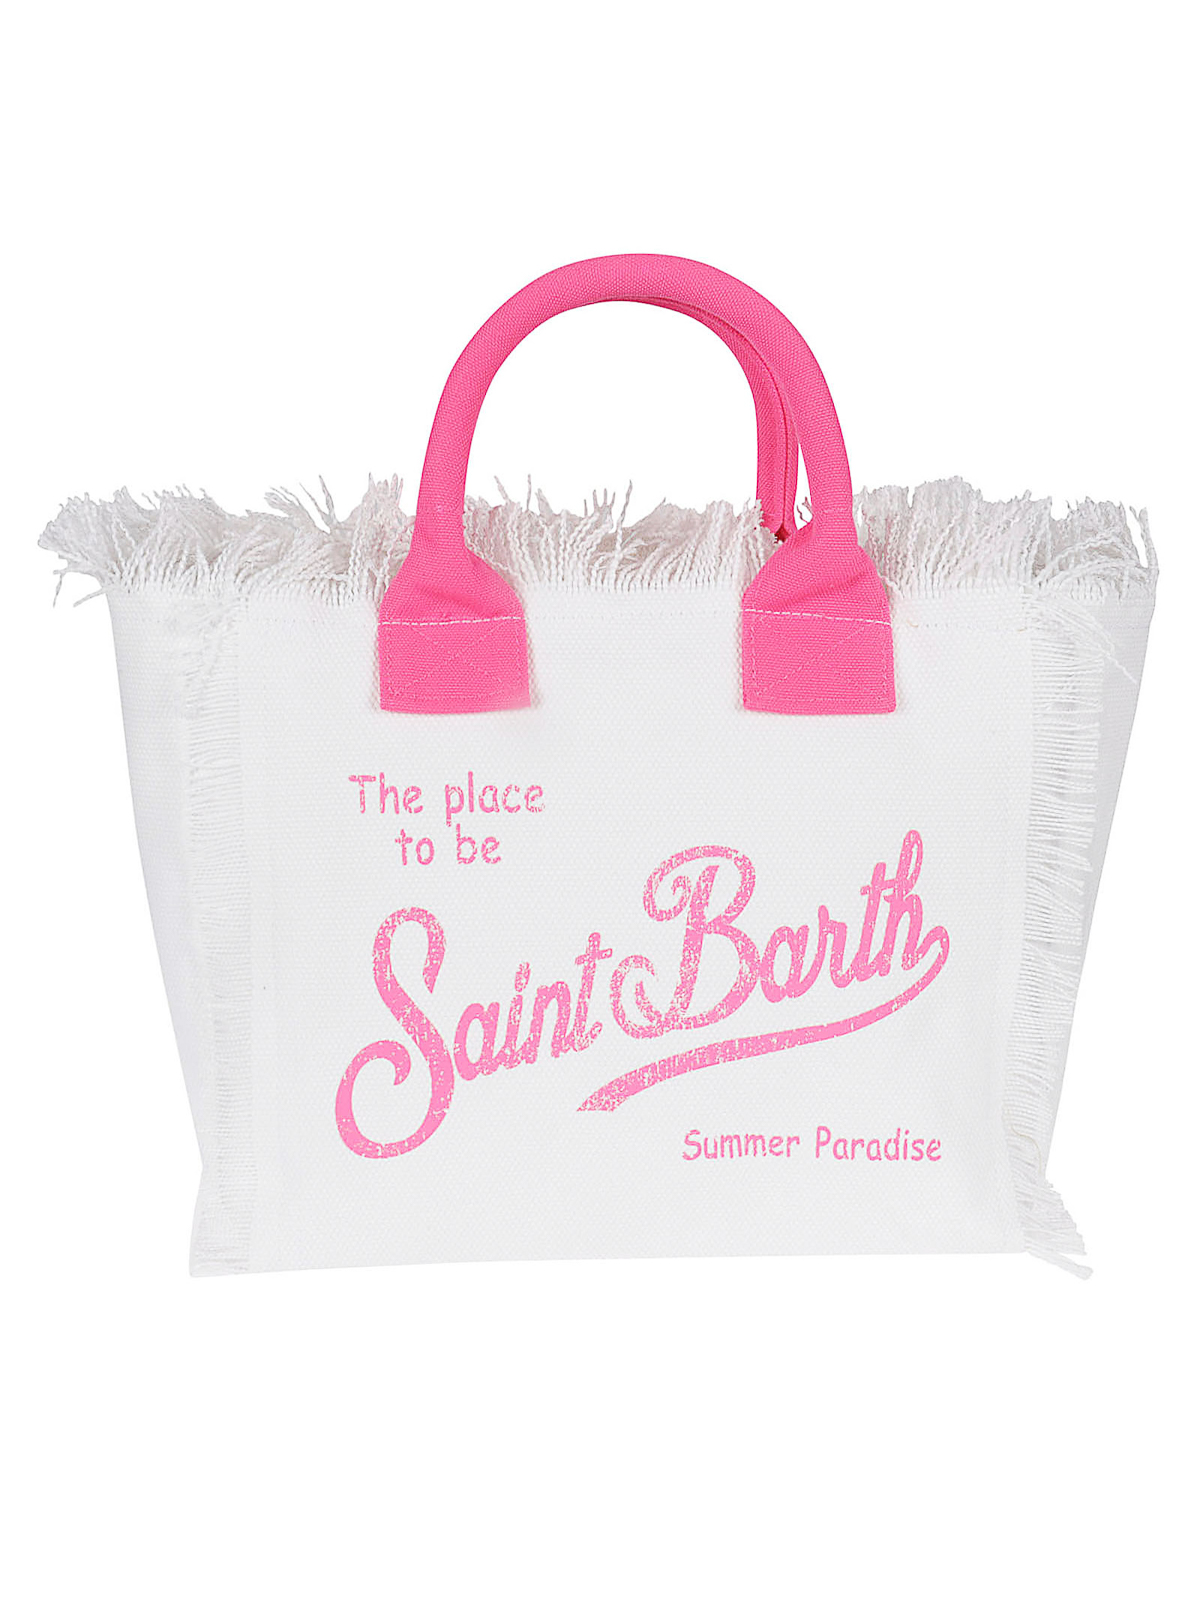 Colette embroidered-logo beach bag, MC2 Saint Barth